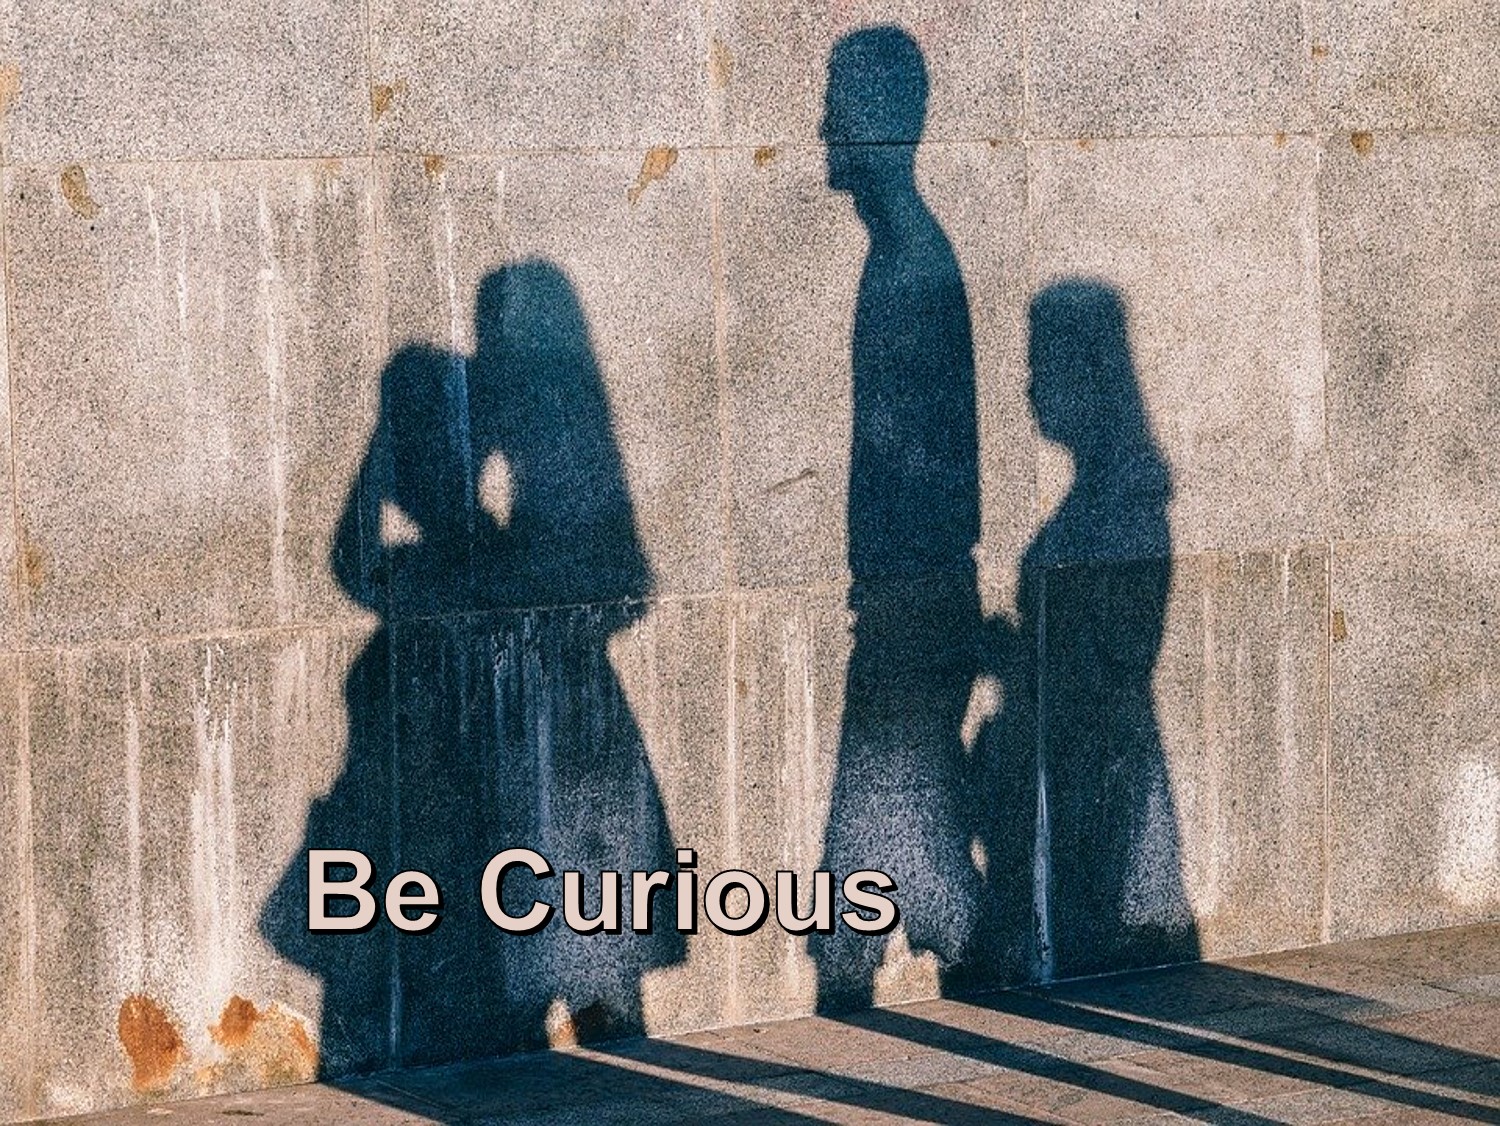 dcc-be-curious.2019.jpg